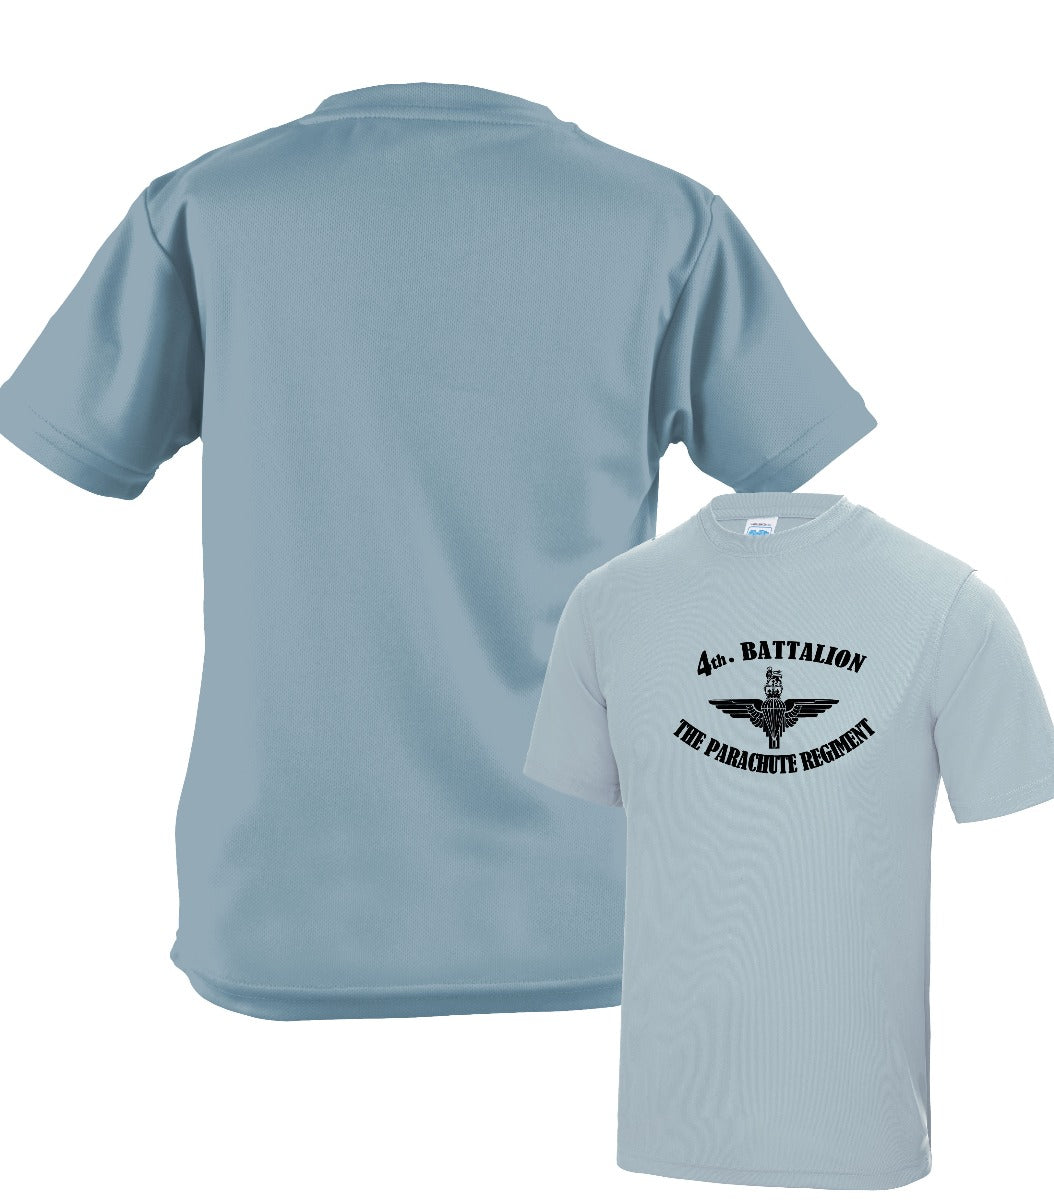 Double Printed 4th Battalion Parachute Regiment Wicking T-Shirt